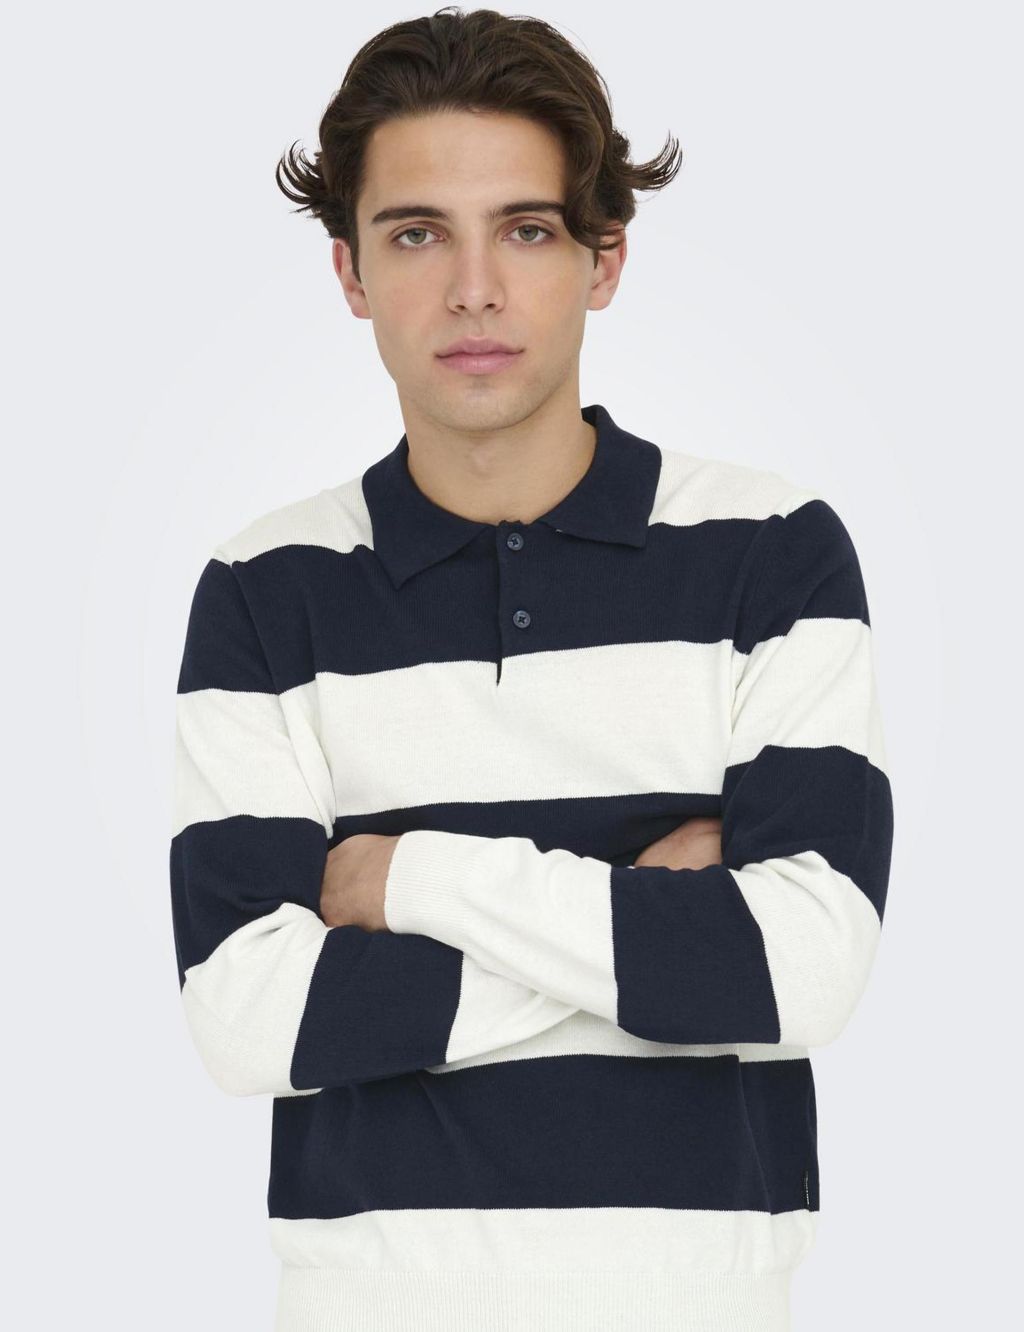 Cotton Rich Striped Long Sleeve Polo Shirt